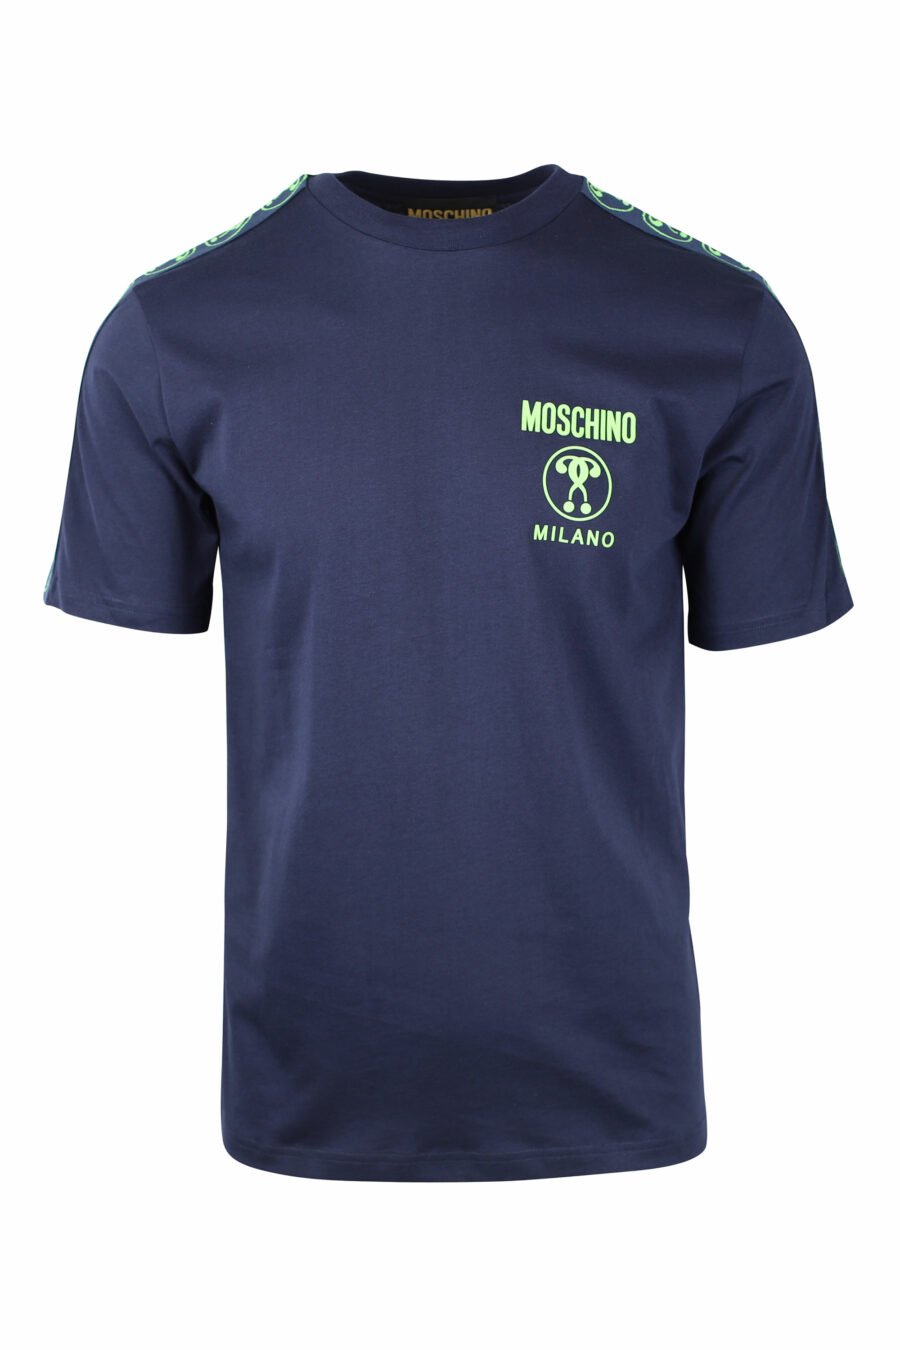 T-shirt bleu foncé avec double question mini-logo en vert - IMG 1439